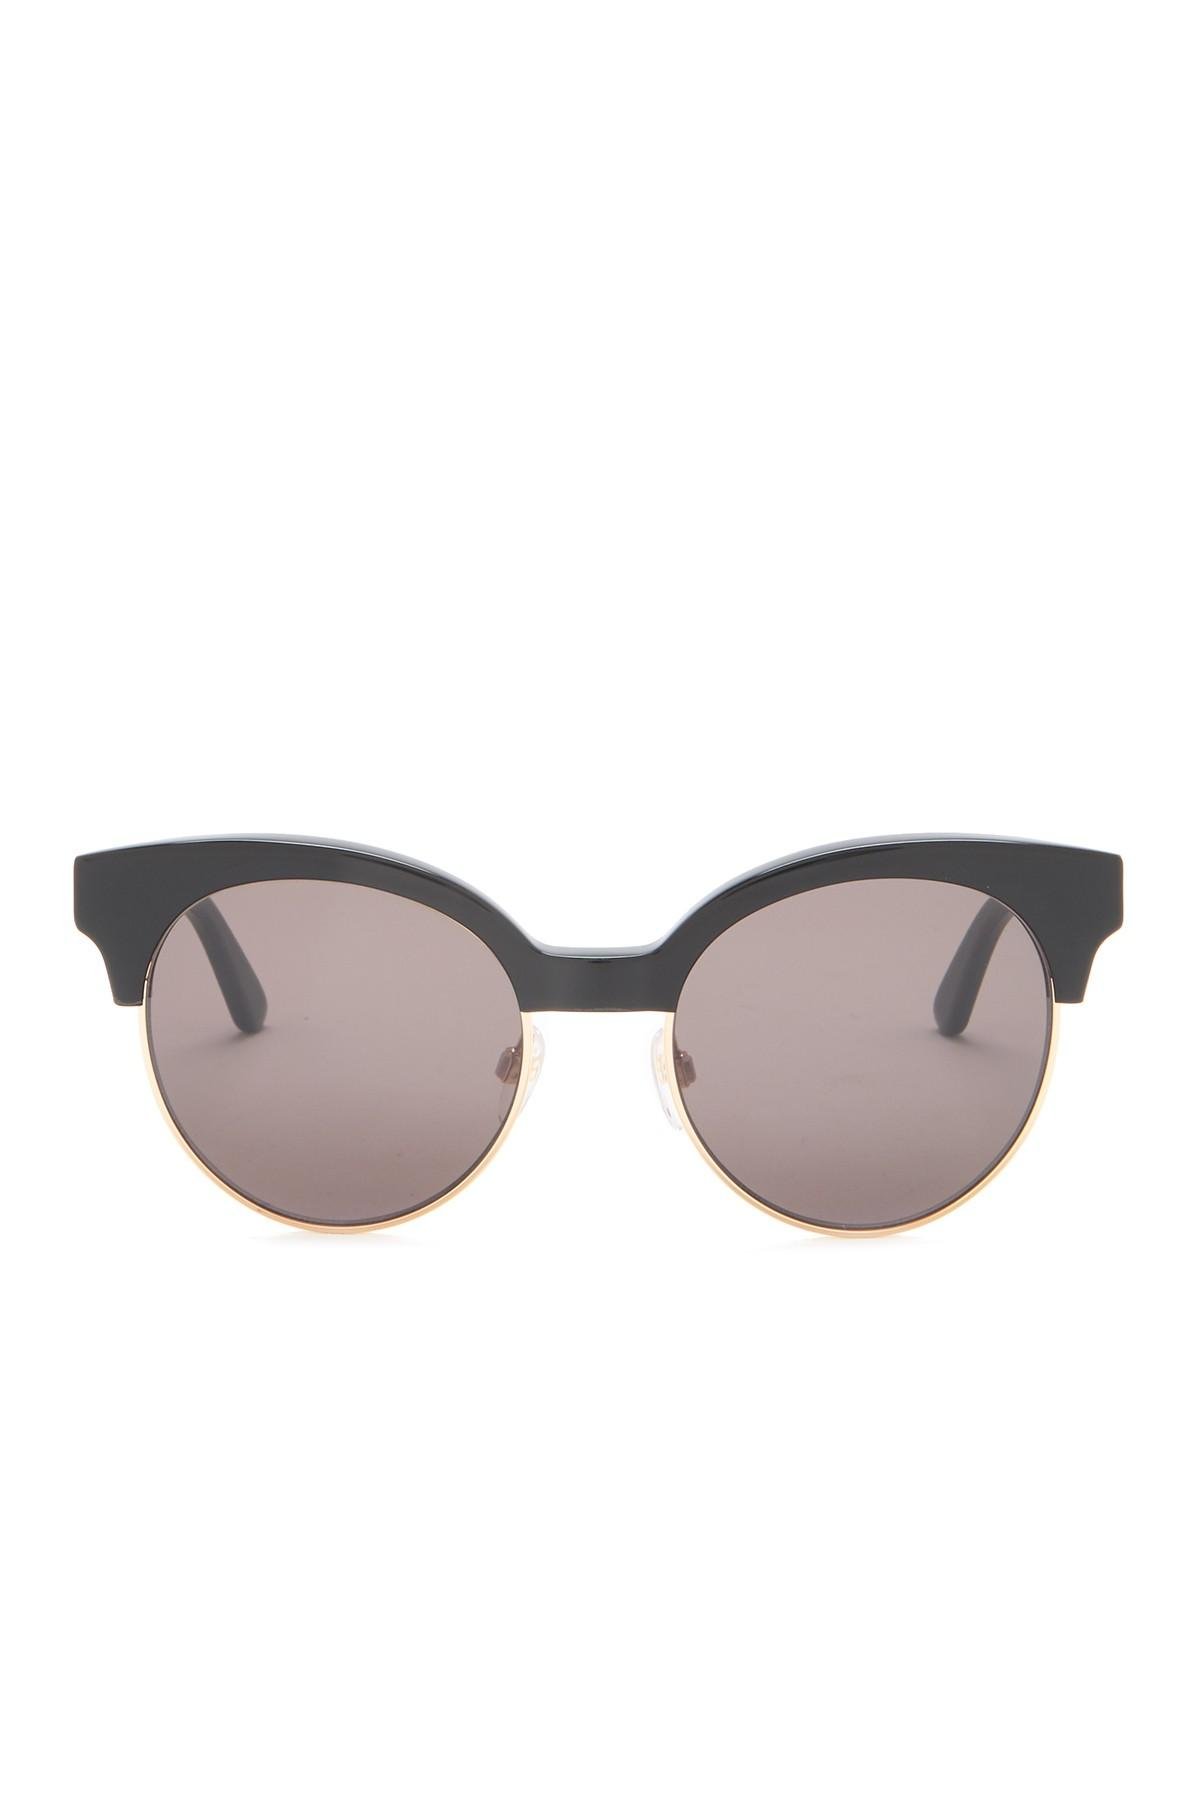 Balenciaga Round 51mm Sunglasses - Lyst